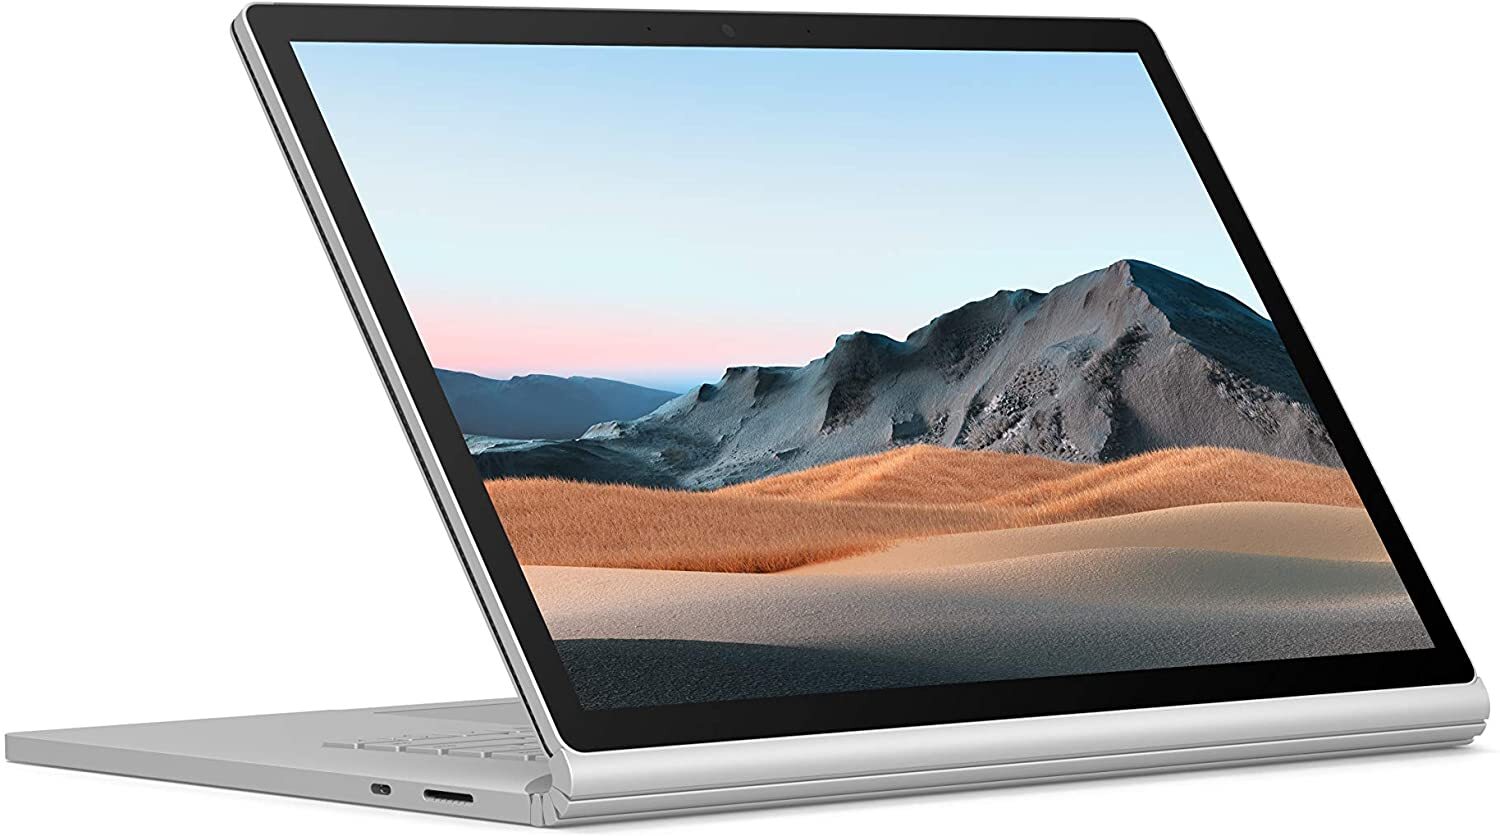 Laptop Microsoft Surface Book 3 - Intel Core i7-1065G7, 32GB RAM, SSD 1TB, Nvidia Quadro RTX 3000 6GB GDDR6, 15 inch